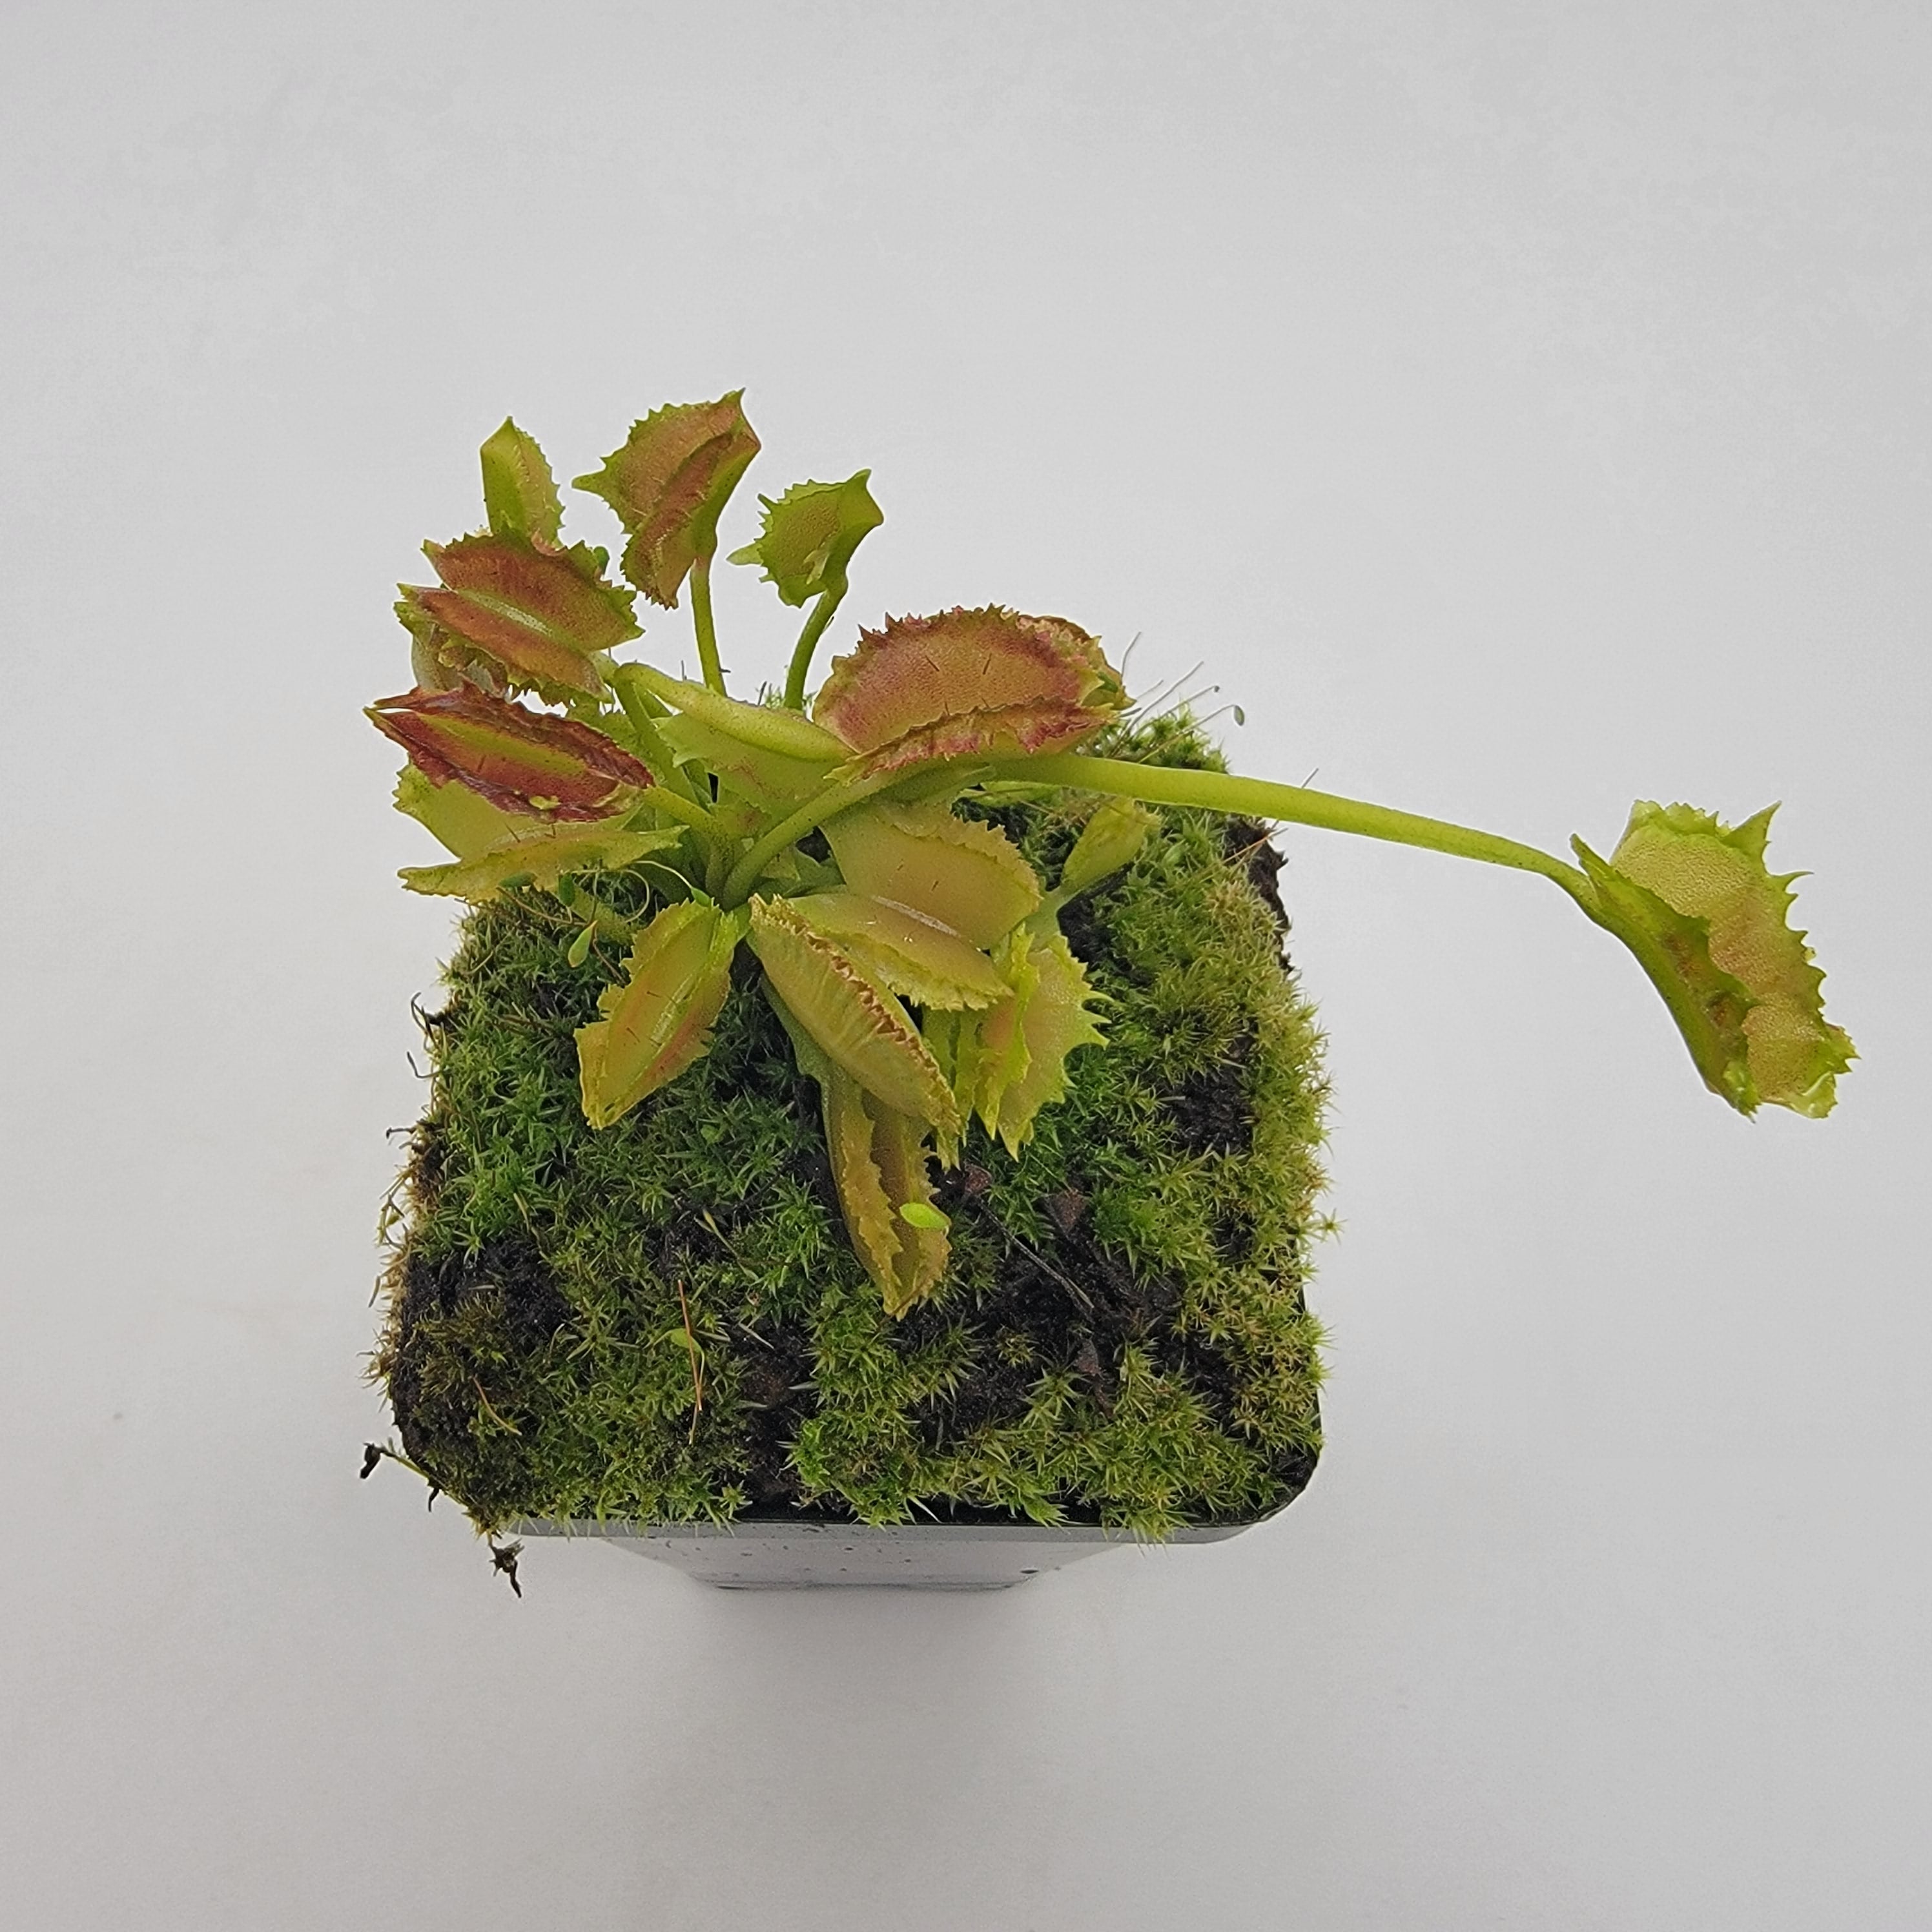 Venus flytrap (Dionaea muscipula) "Biohazard II" - Rainbow Carnivorous Plants LLC